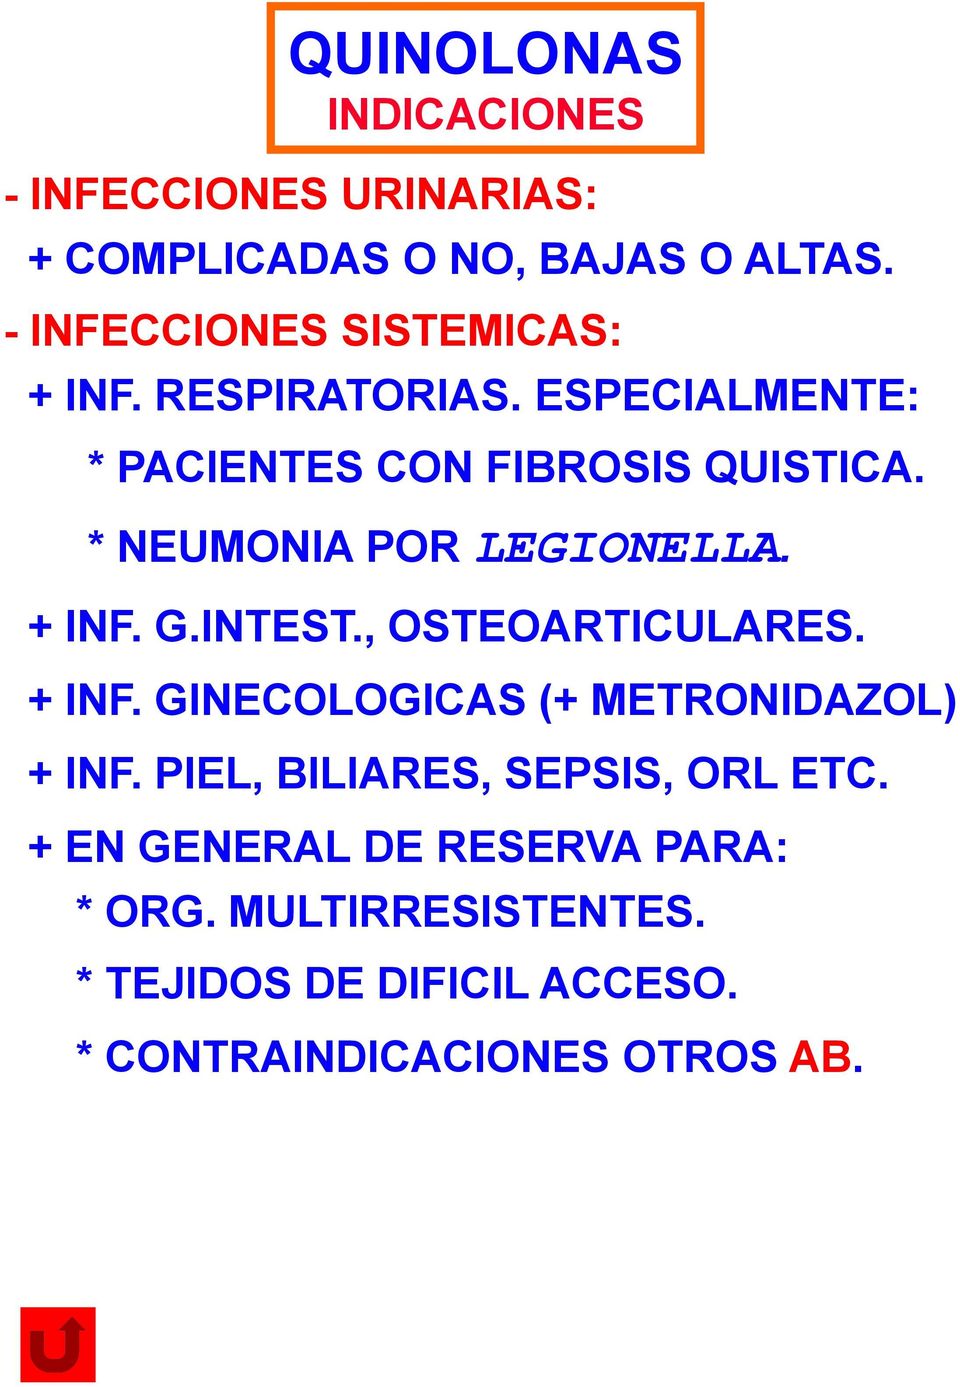 * NEUMONIA POR LEGIONELLA. + INF. G.INTEST., OSTEOARTICULARES. + INF. GINECOLOGICAS (+ METRONIDAZOL) + INF.